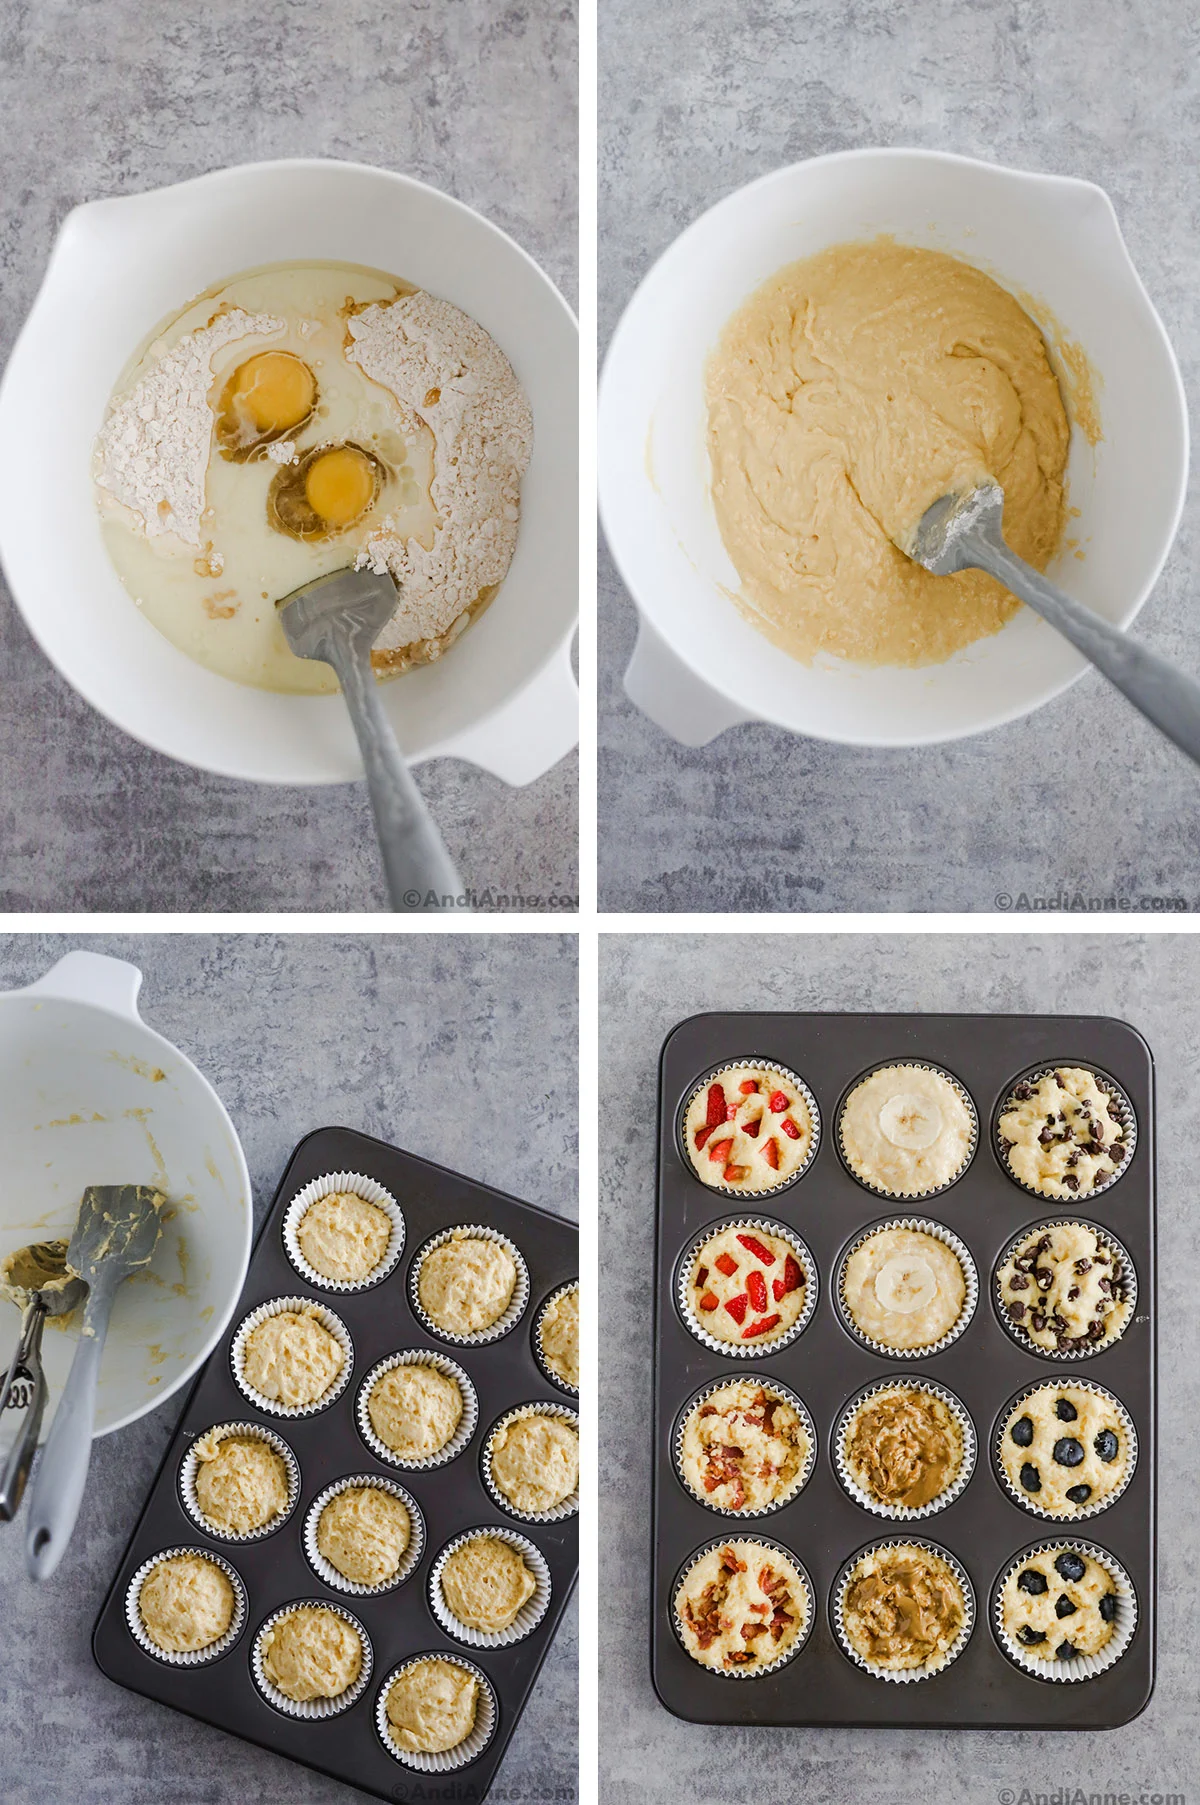 Kitchen Details 24 Mini Cupcake Pan - Gray